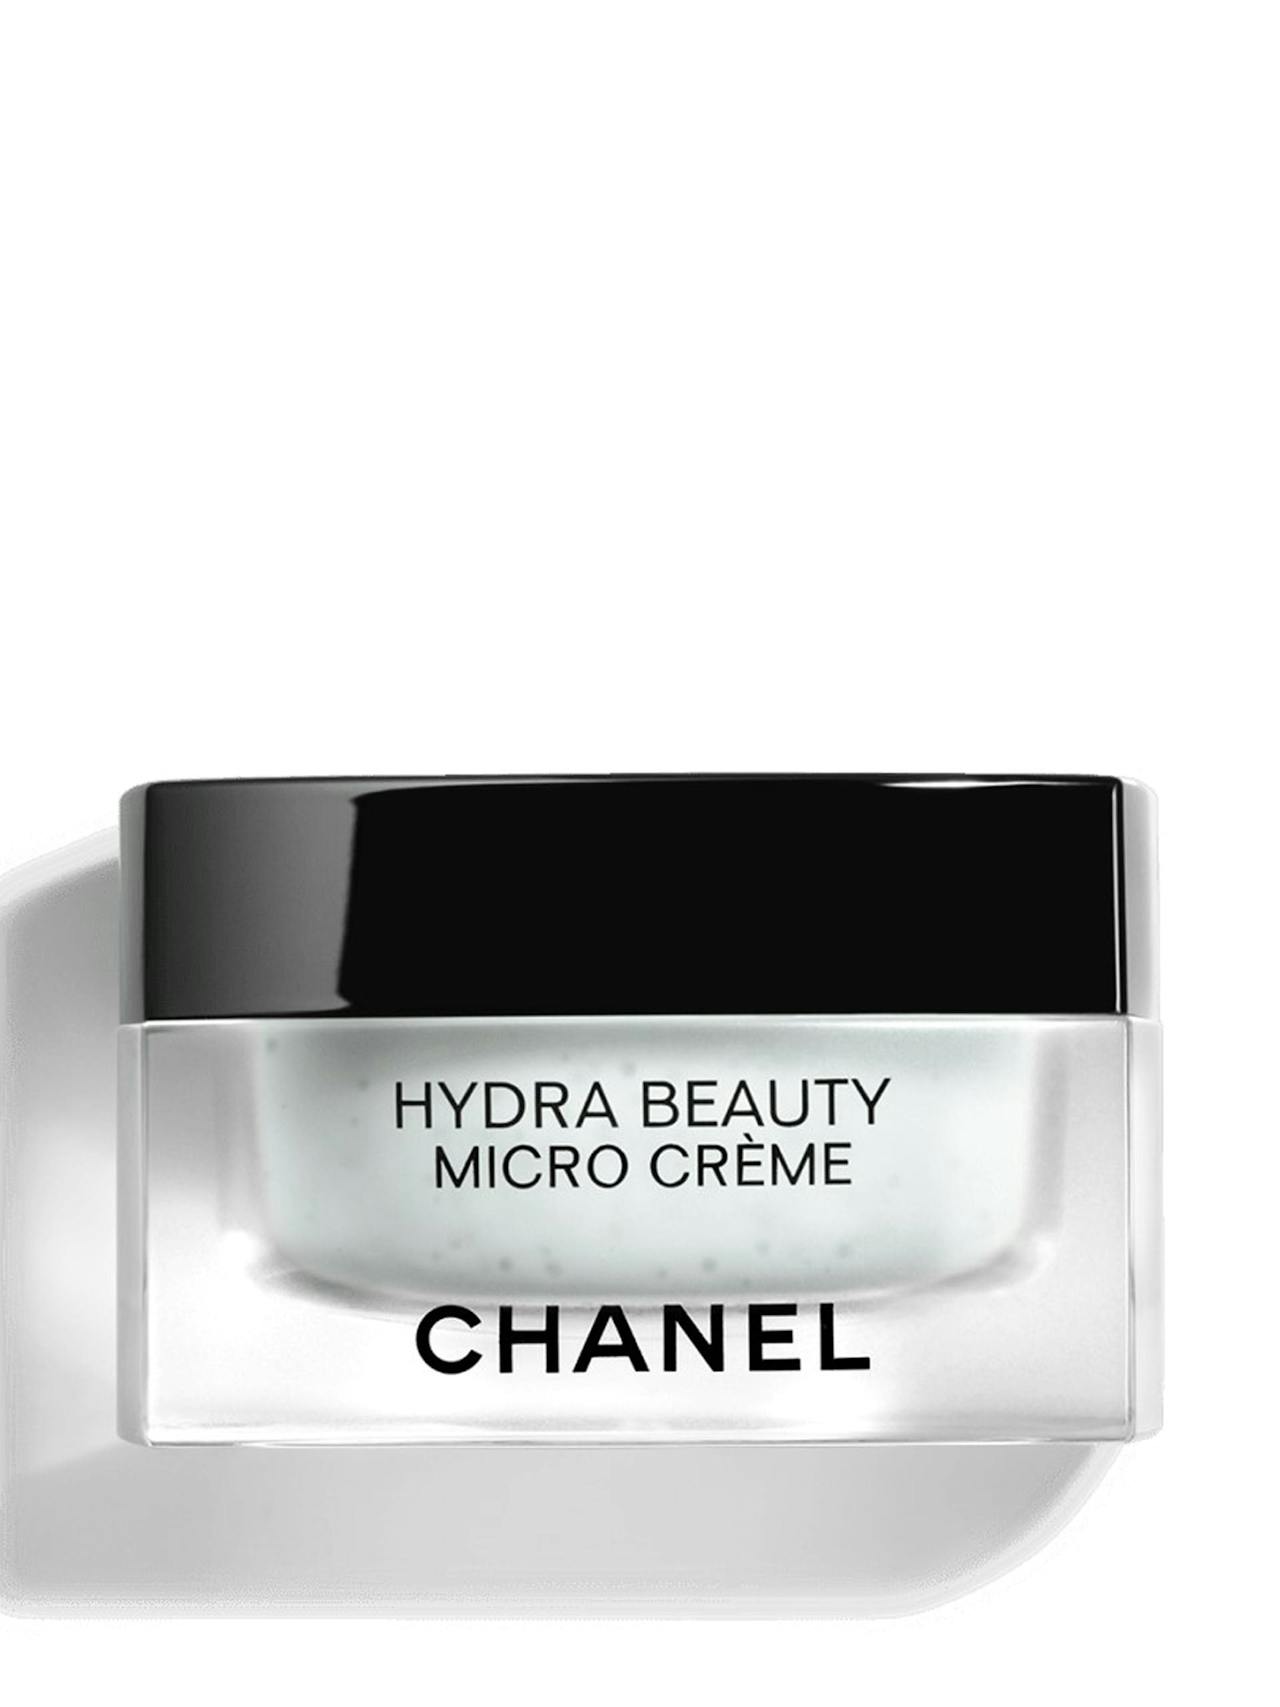 Hydra Beauty Micro Crème